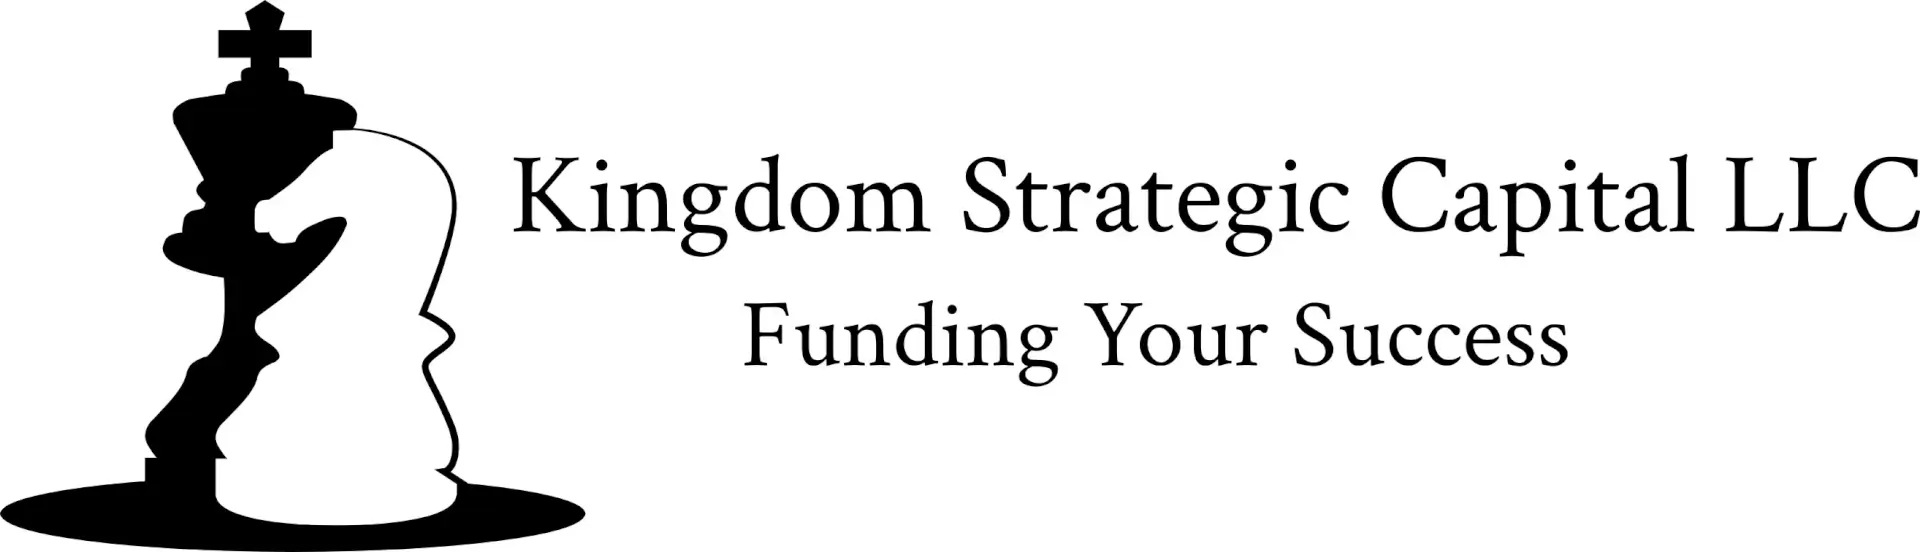 Kingdom Strategic Capital